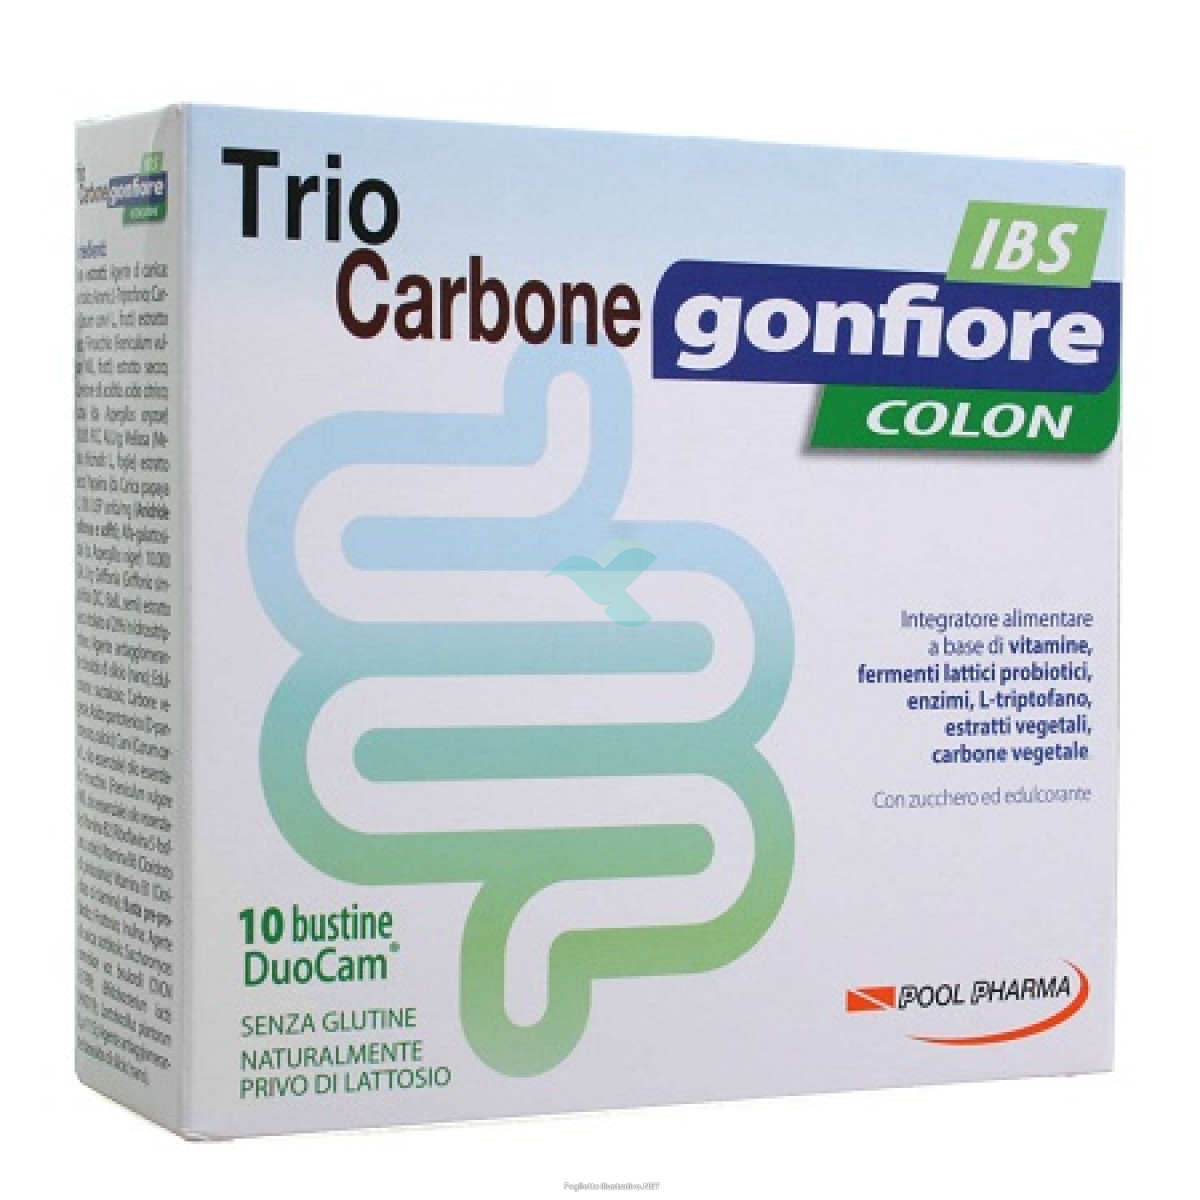 Pool Pharma Triocarbone Gonfiore Ibs 10 Buste Duocam Da 2 G + 1,5 G